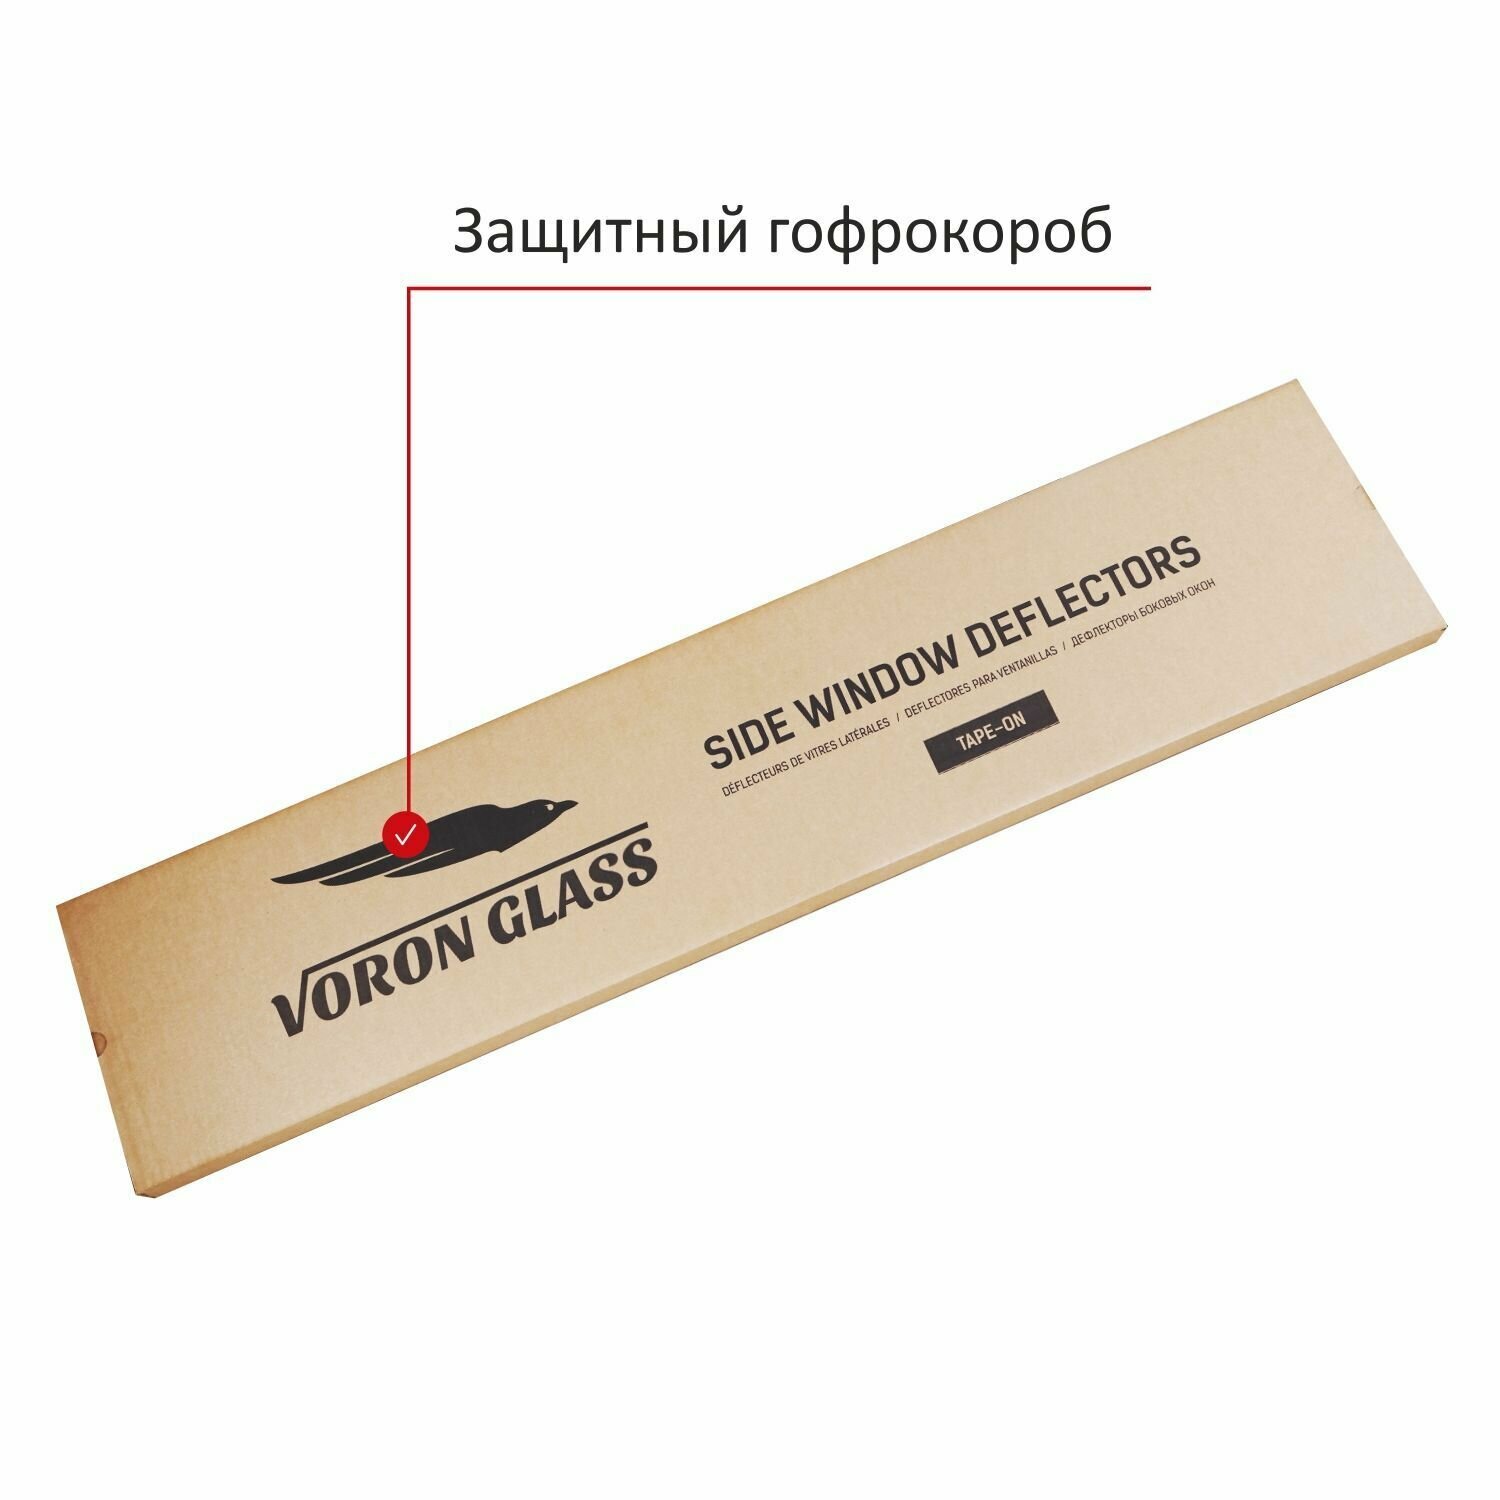 Дефлекторы на окна Voron Glass ВАЗ (Lada) Granta,лифтбек, комплект 4шт, - фото №8